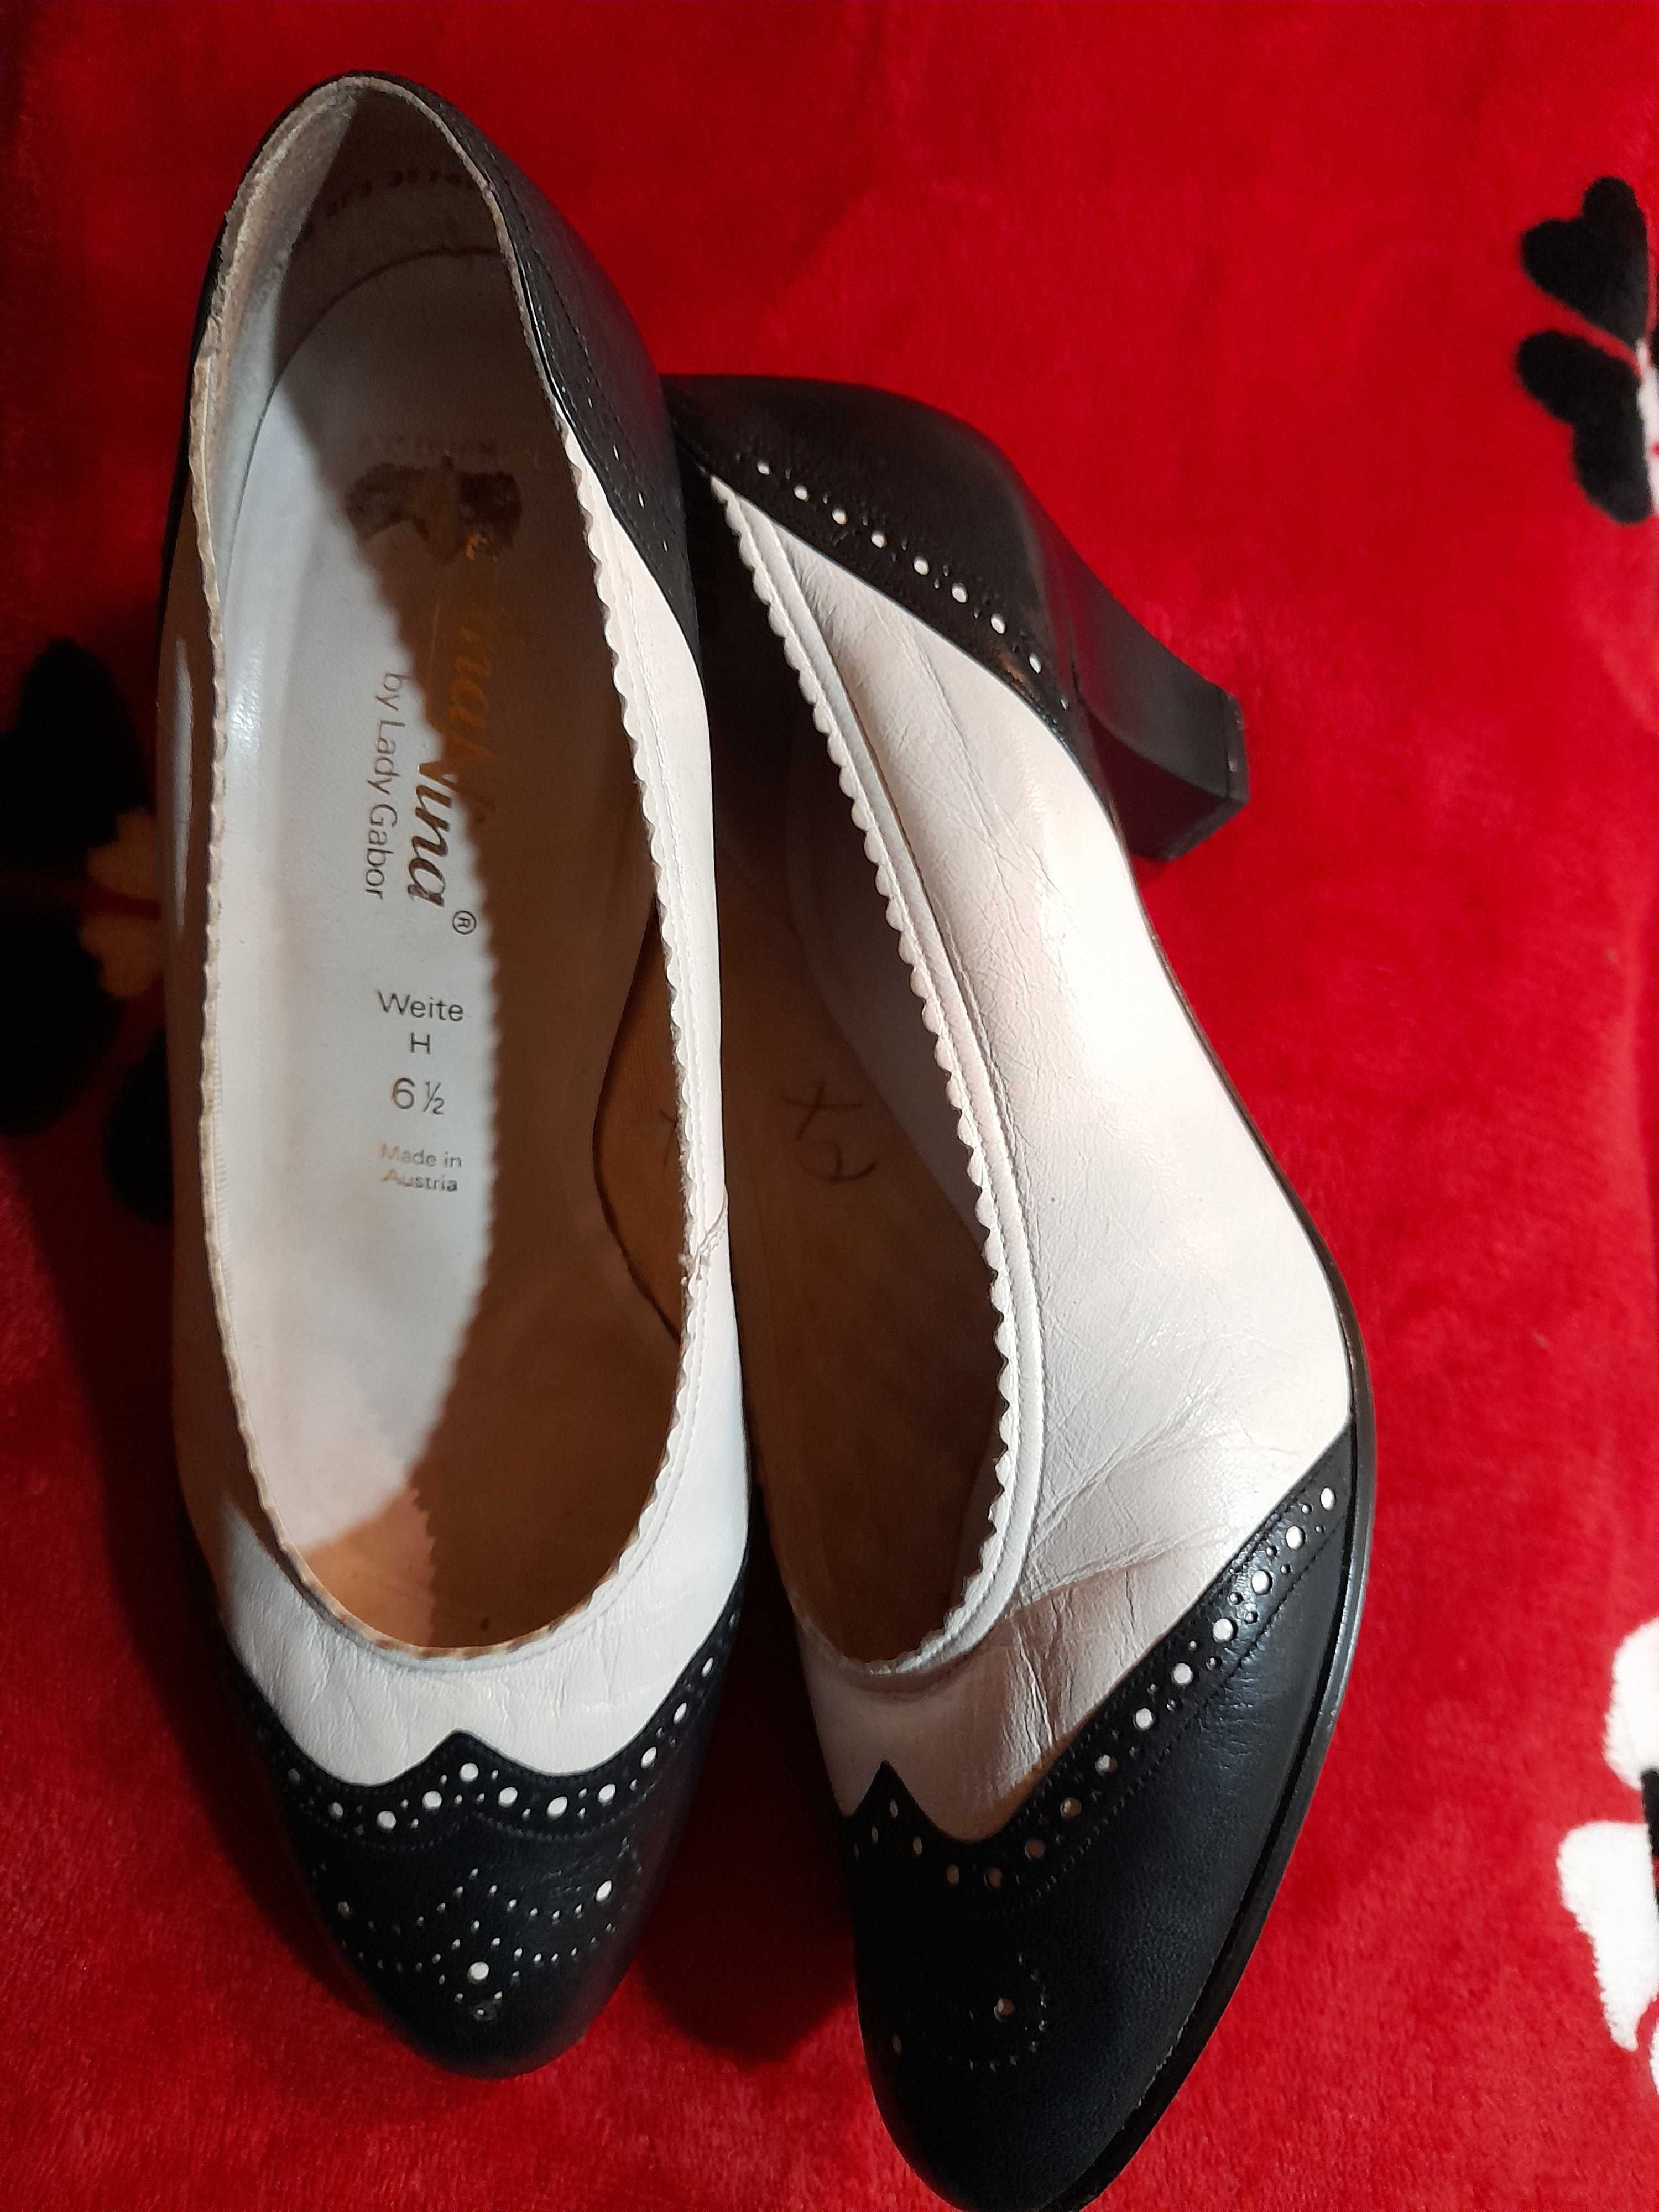 Pantofi dama piele naturala, alb cu negru, Gabor, marimea 6 1/2 H (39)